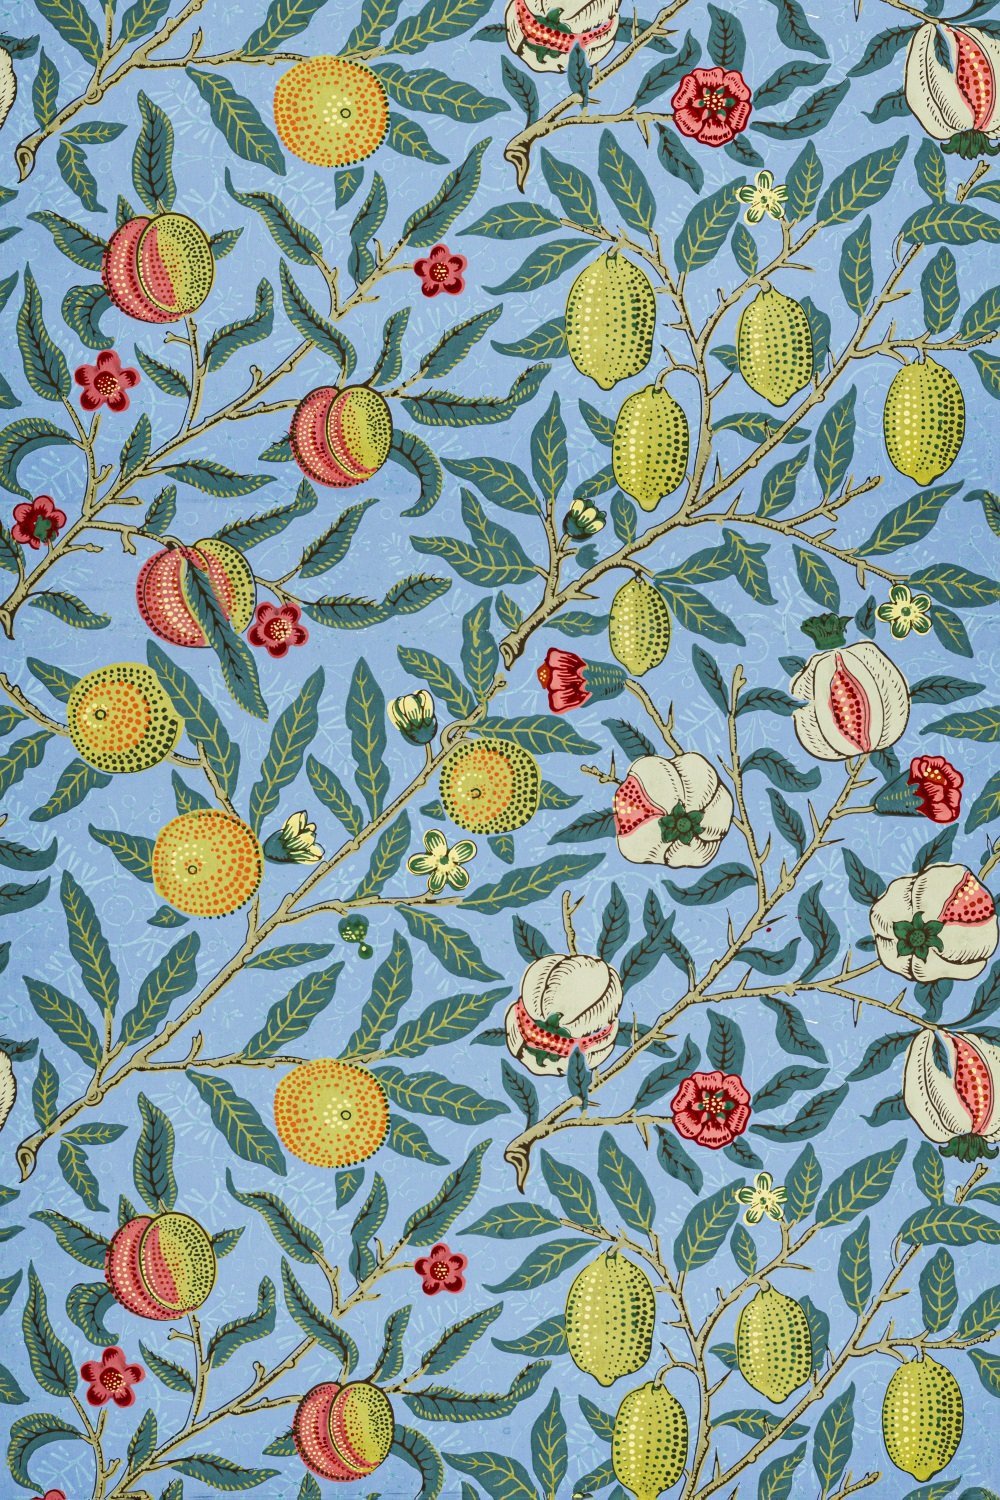 Pomegranate Four Fruits Mural Wallpaper (SqM)